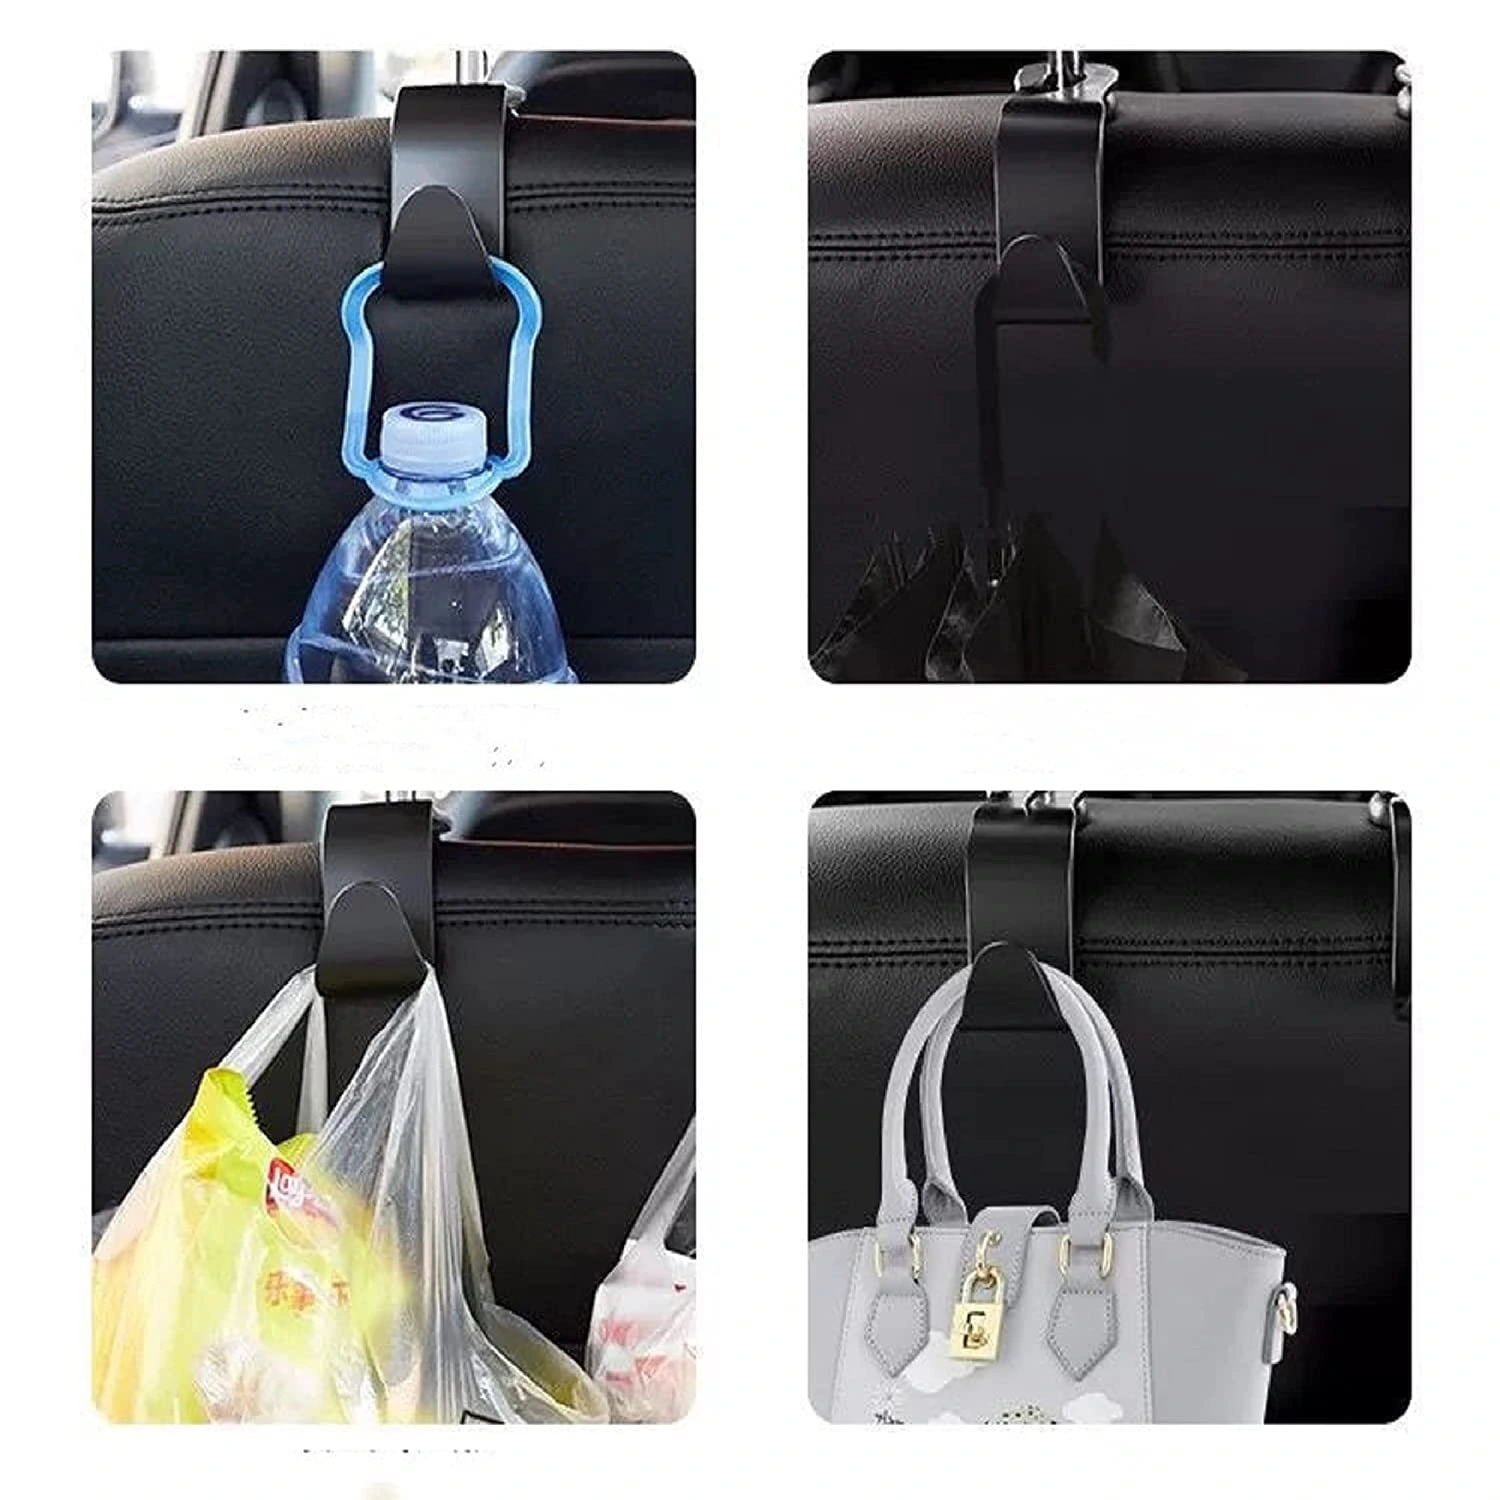 https://spiderjuice.in/wp-content/uploads/2023/05/SpiderJuice-4-Pcs-Universal-Car-Fit-Backseat-Head-Rest-Black-Plastic-Storage-Hanger-Hook-Organiser-Suitable-for-All-Shopping-Bags-Purse-Wallets-Clothes-Coats-Umbrella-Water-Bottles2.webp